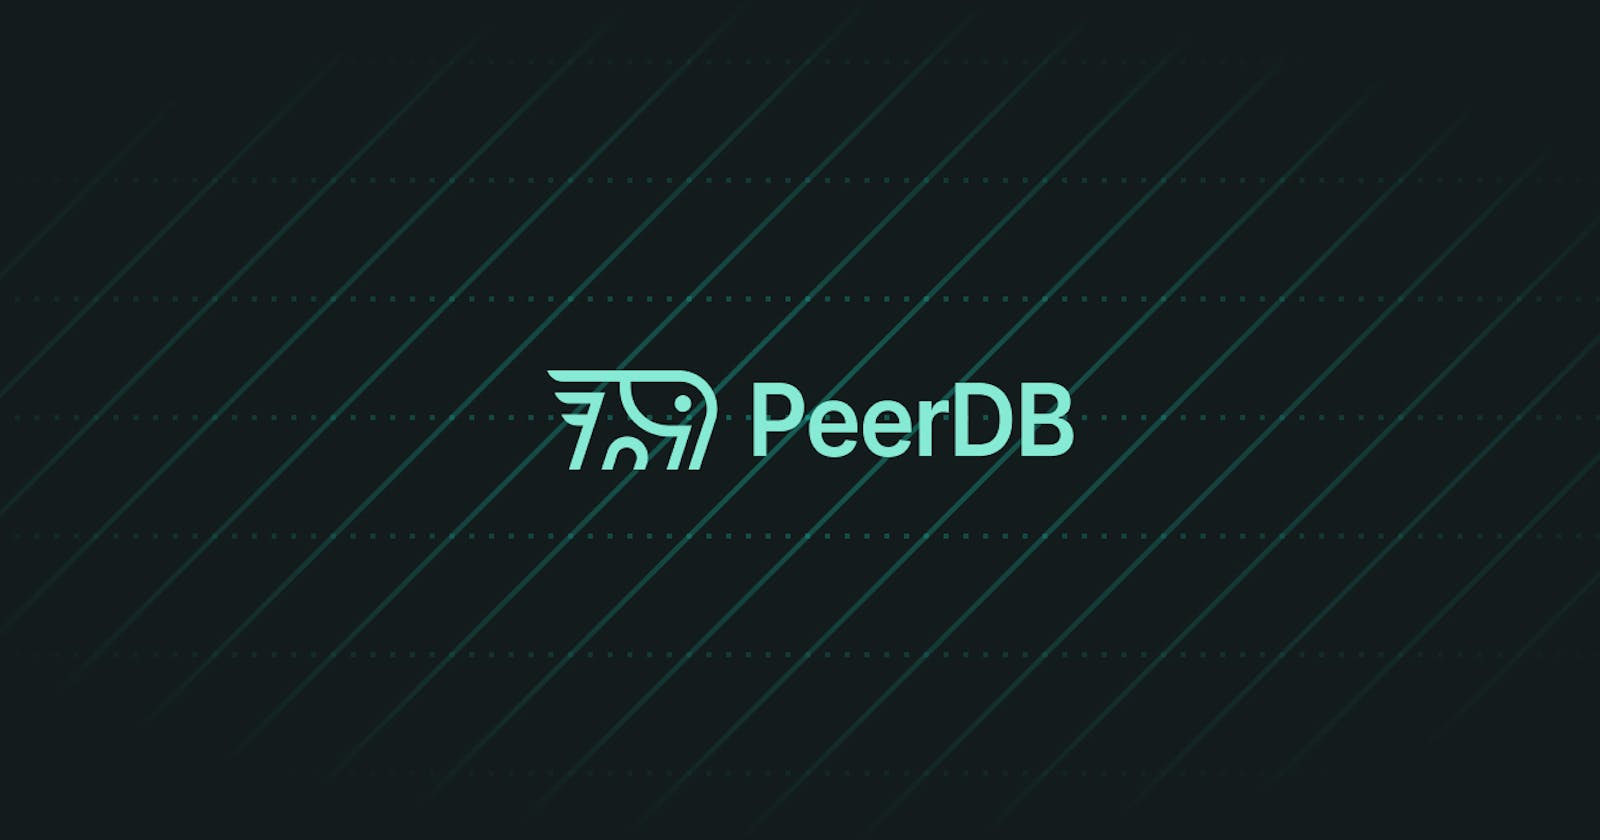 PeerDB raises $3.6 million seed funding to revolutionize data movement for PostgreSQL